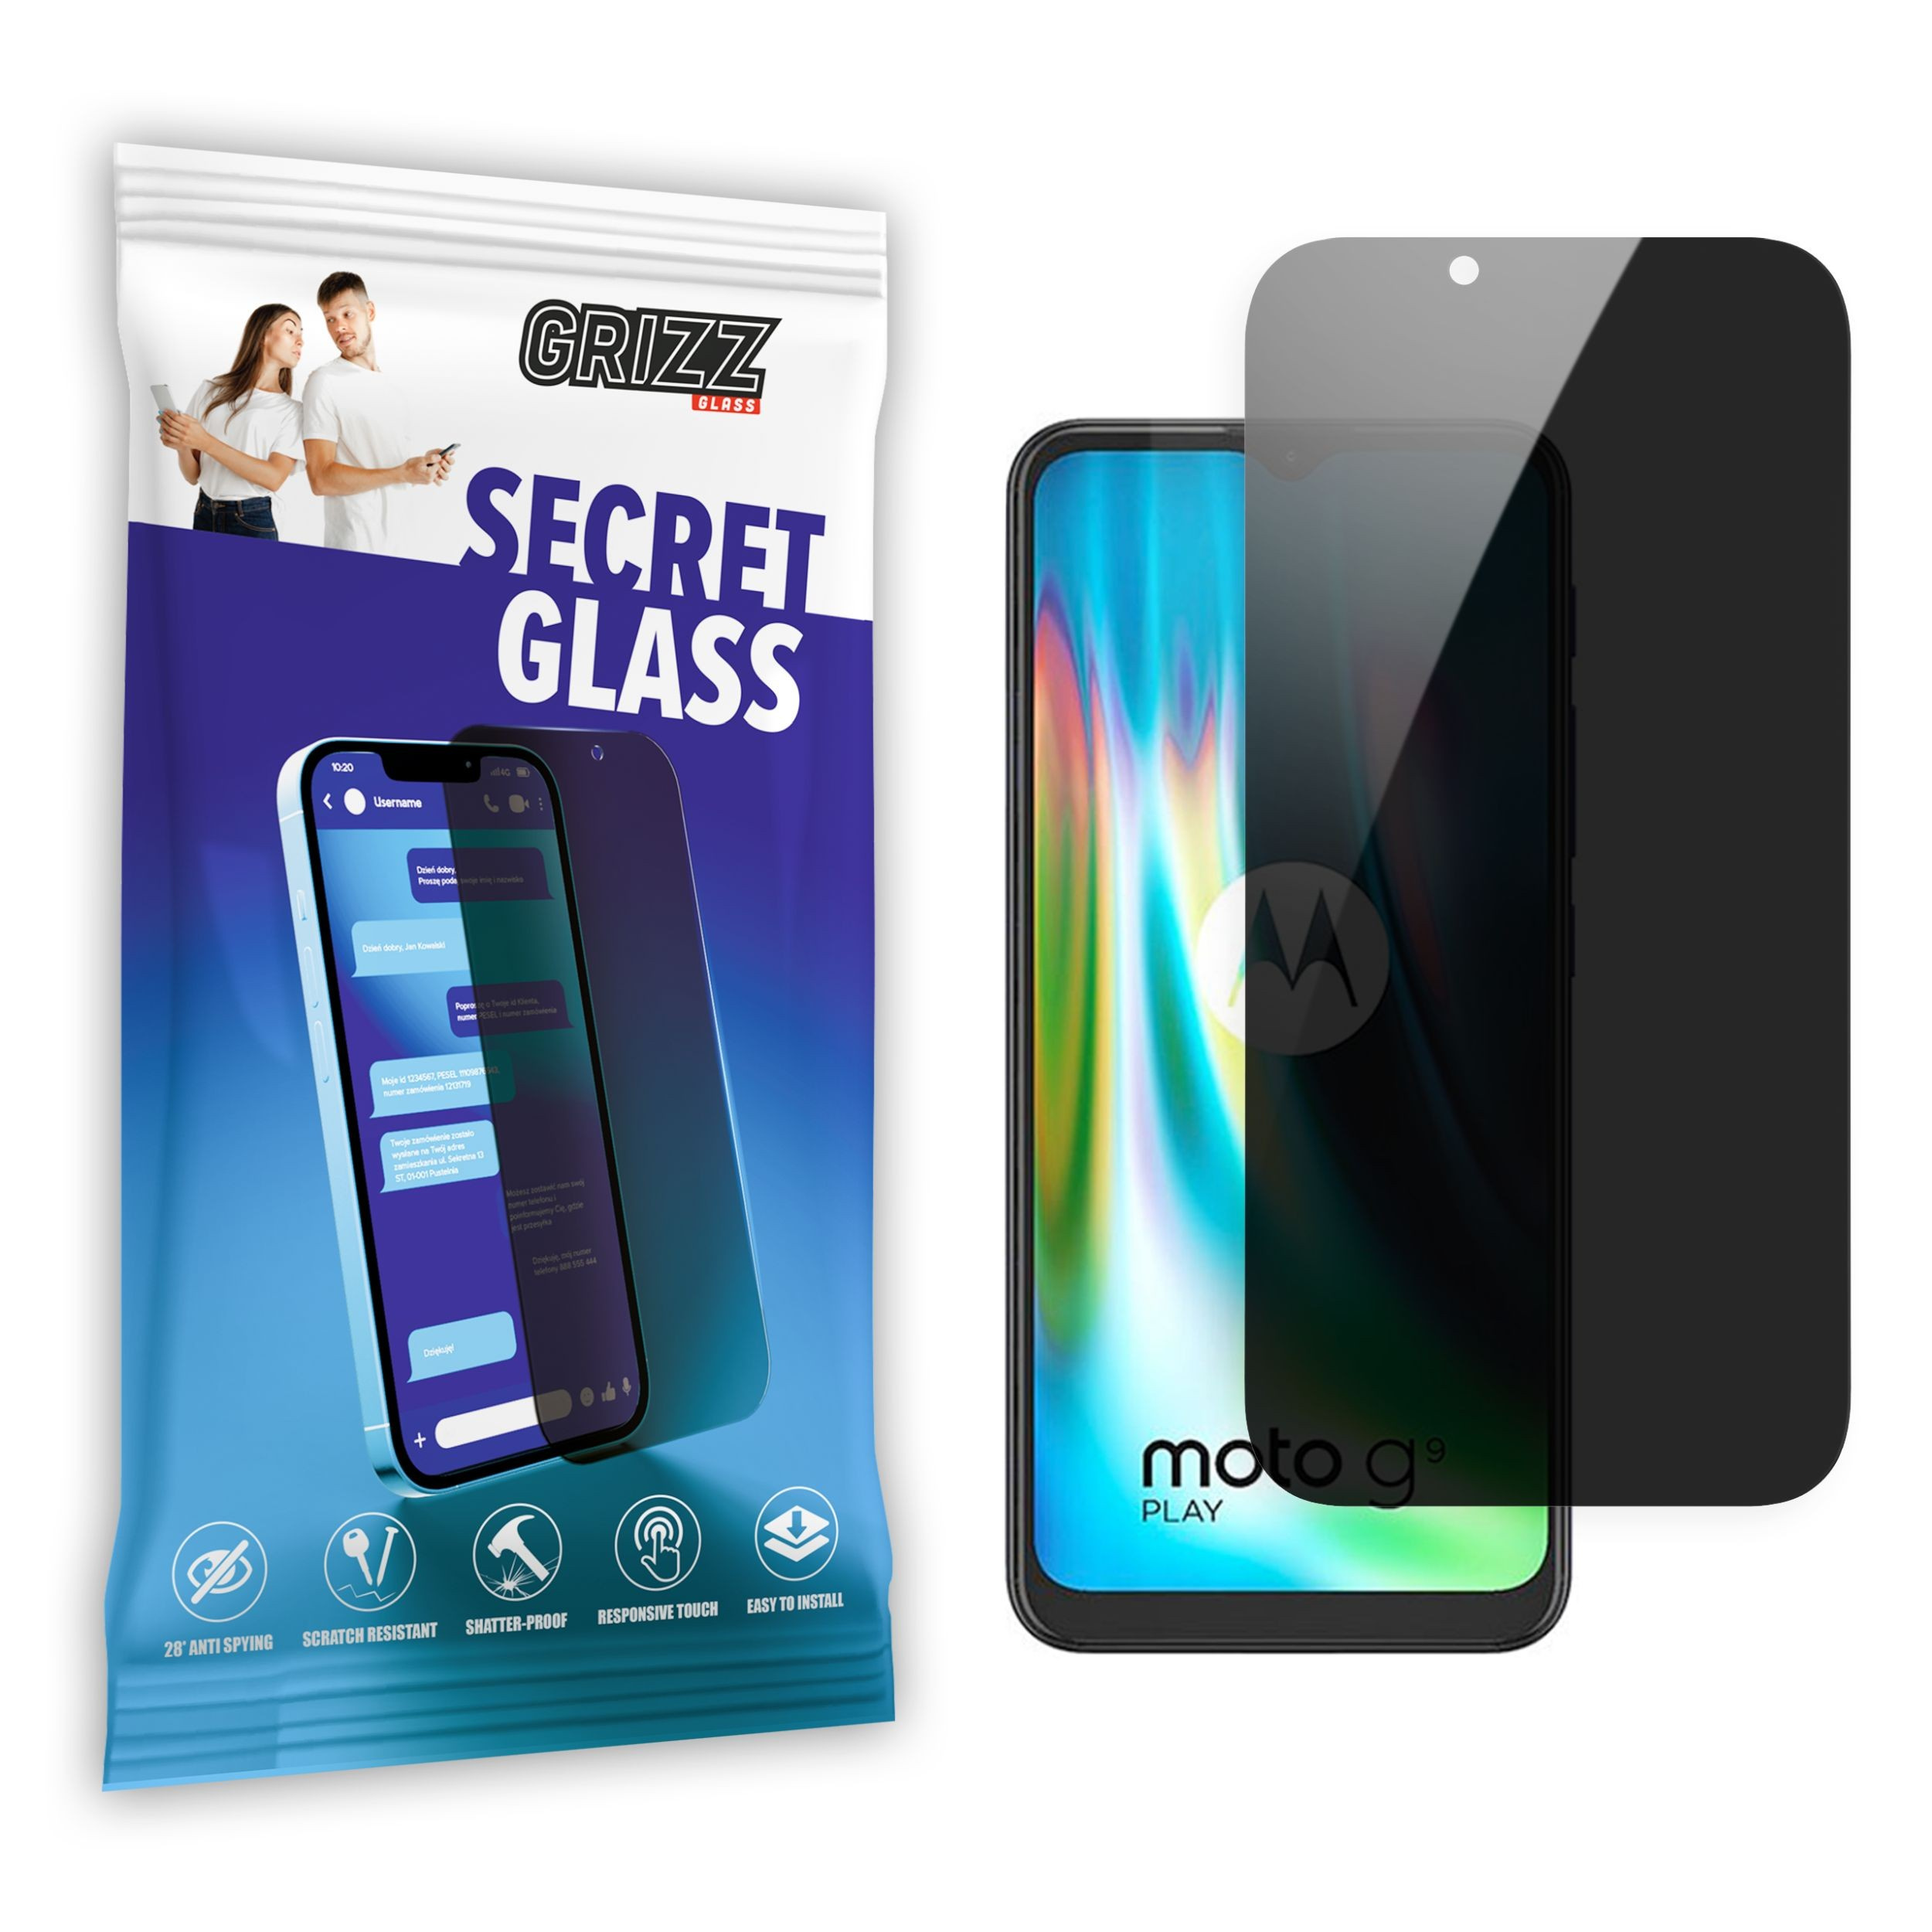 GrizzGlass SecretGlass Motorola Moto G9 Power